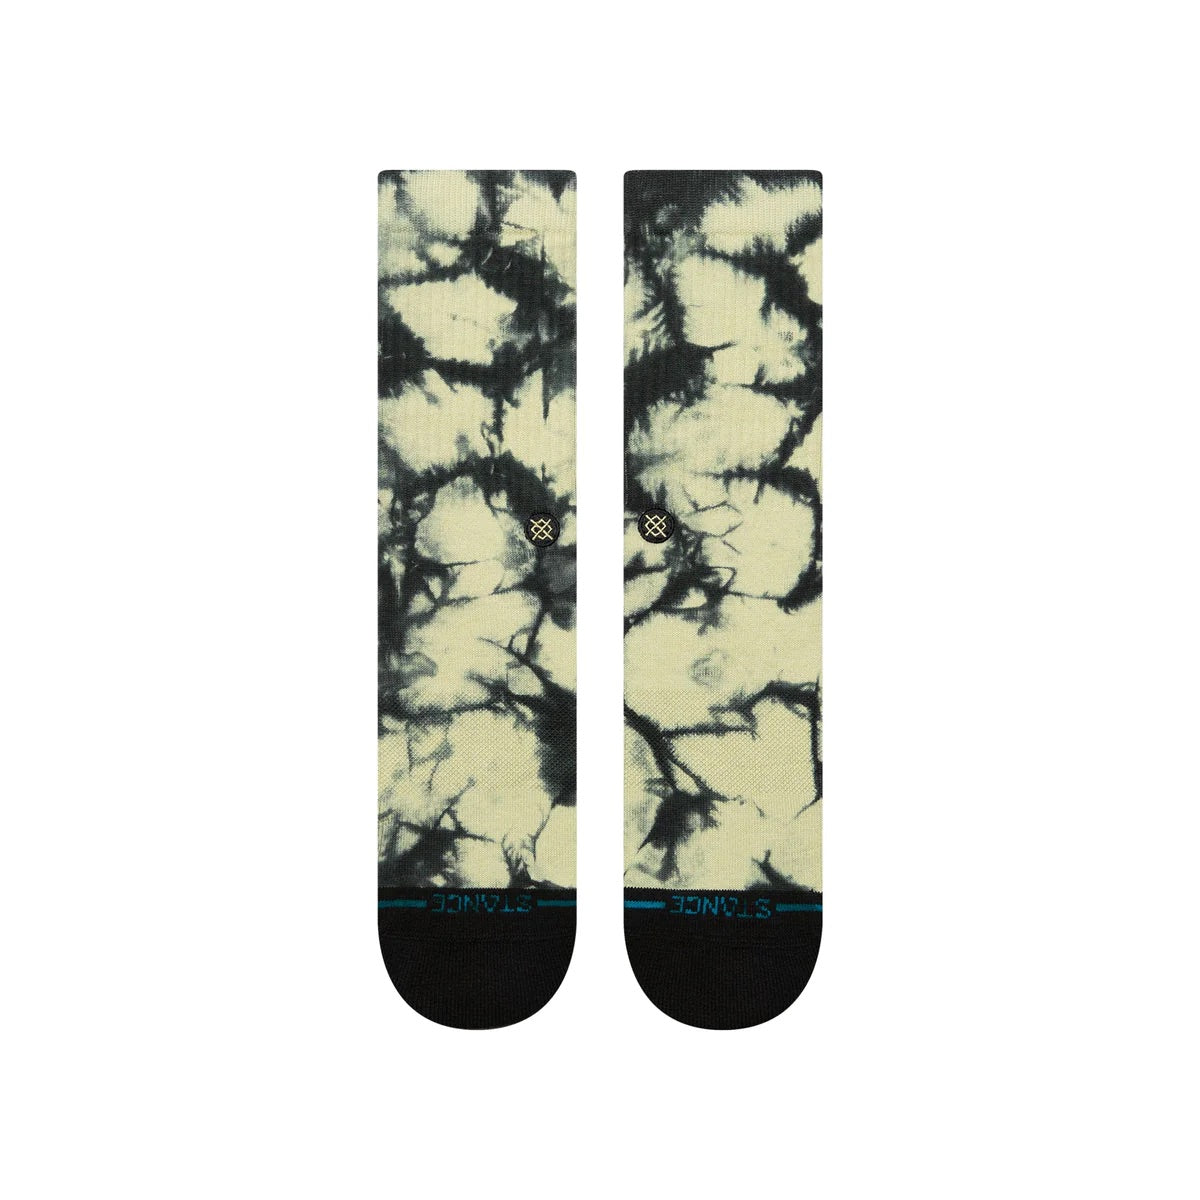 Stance Well Worn Socks - Green/Black image 2